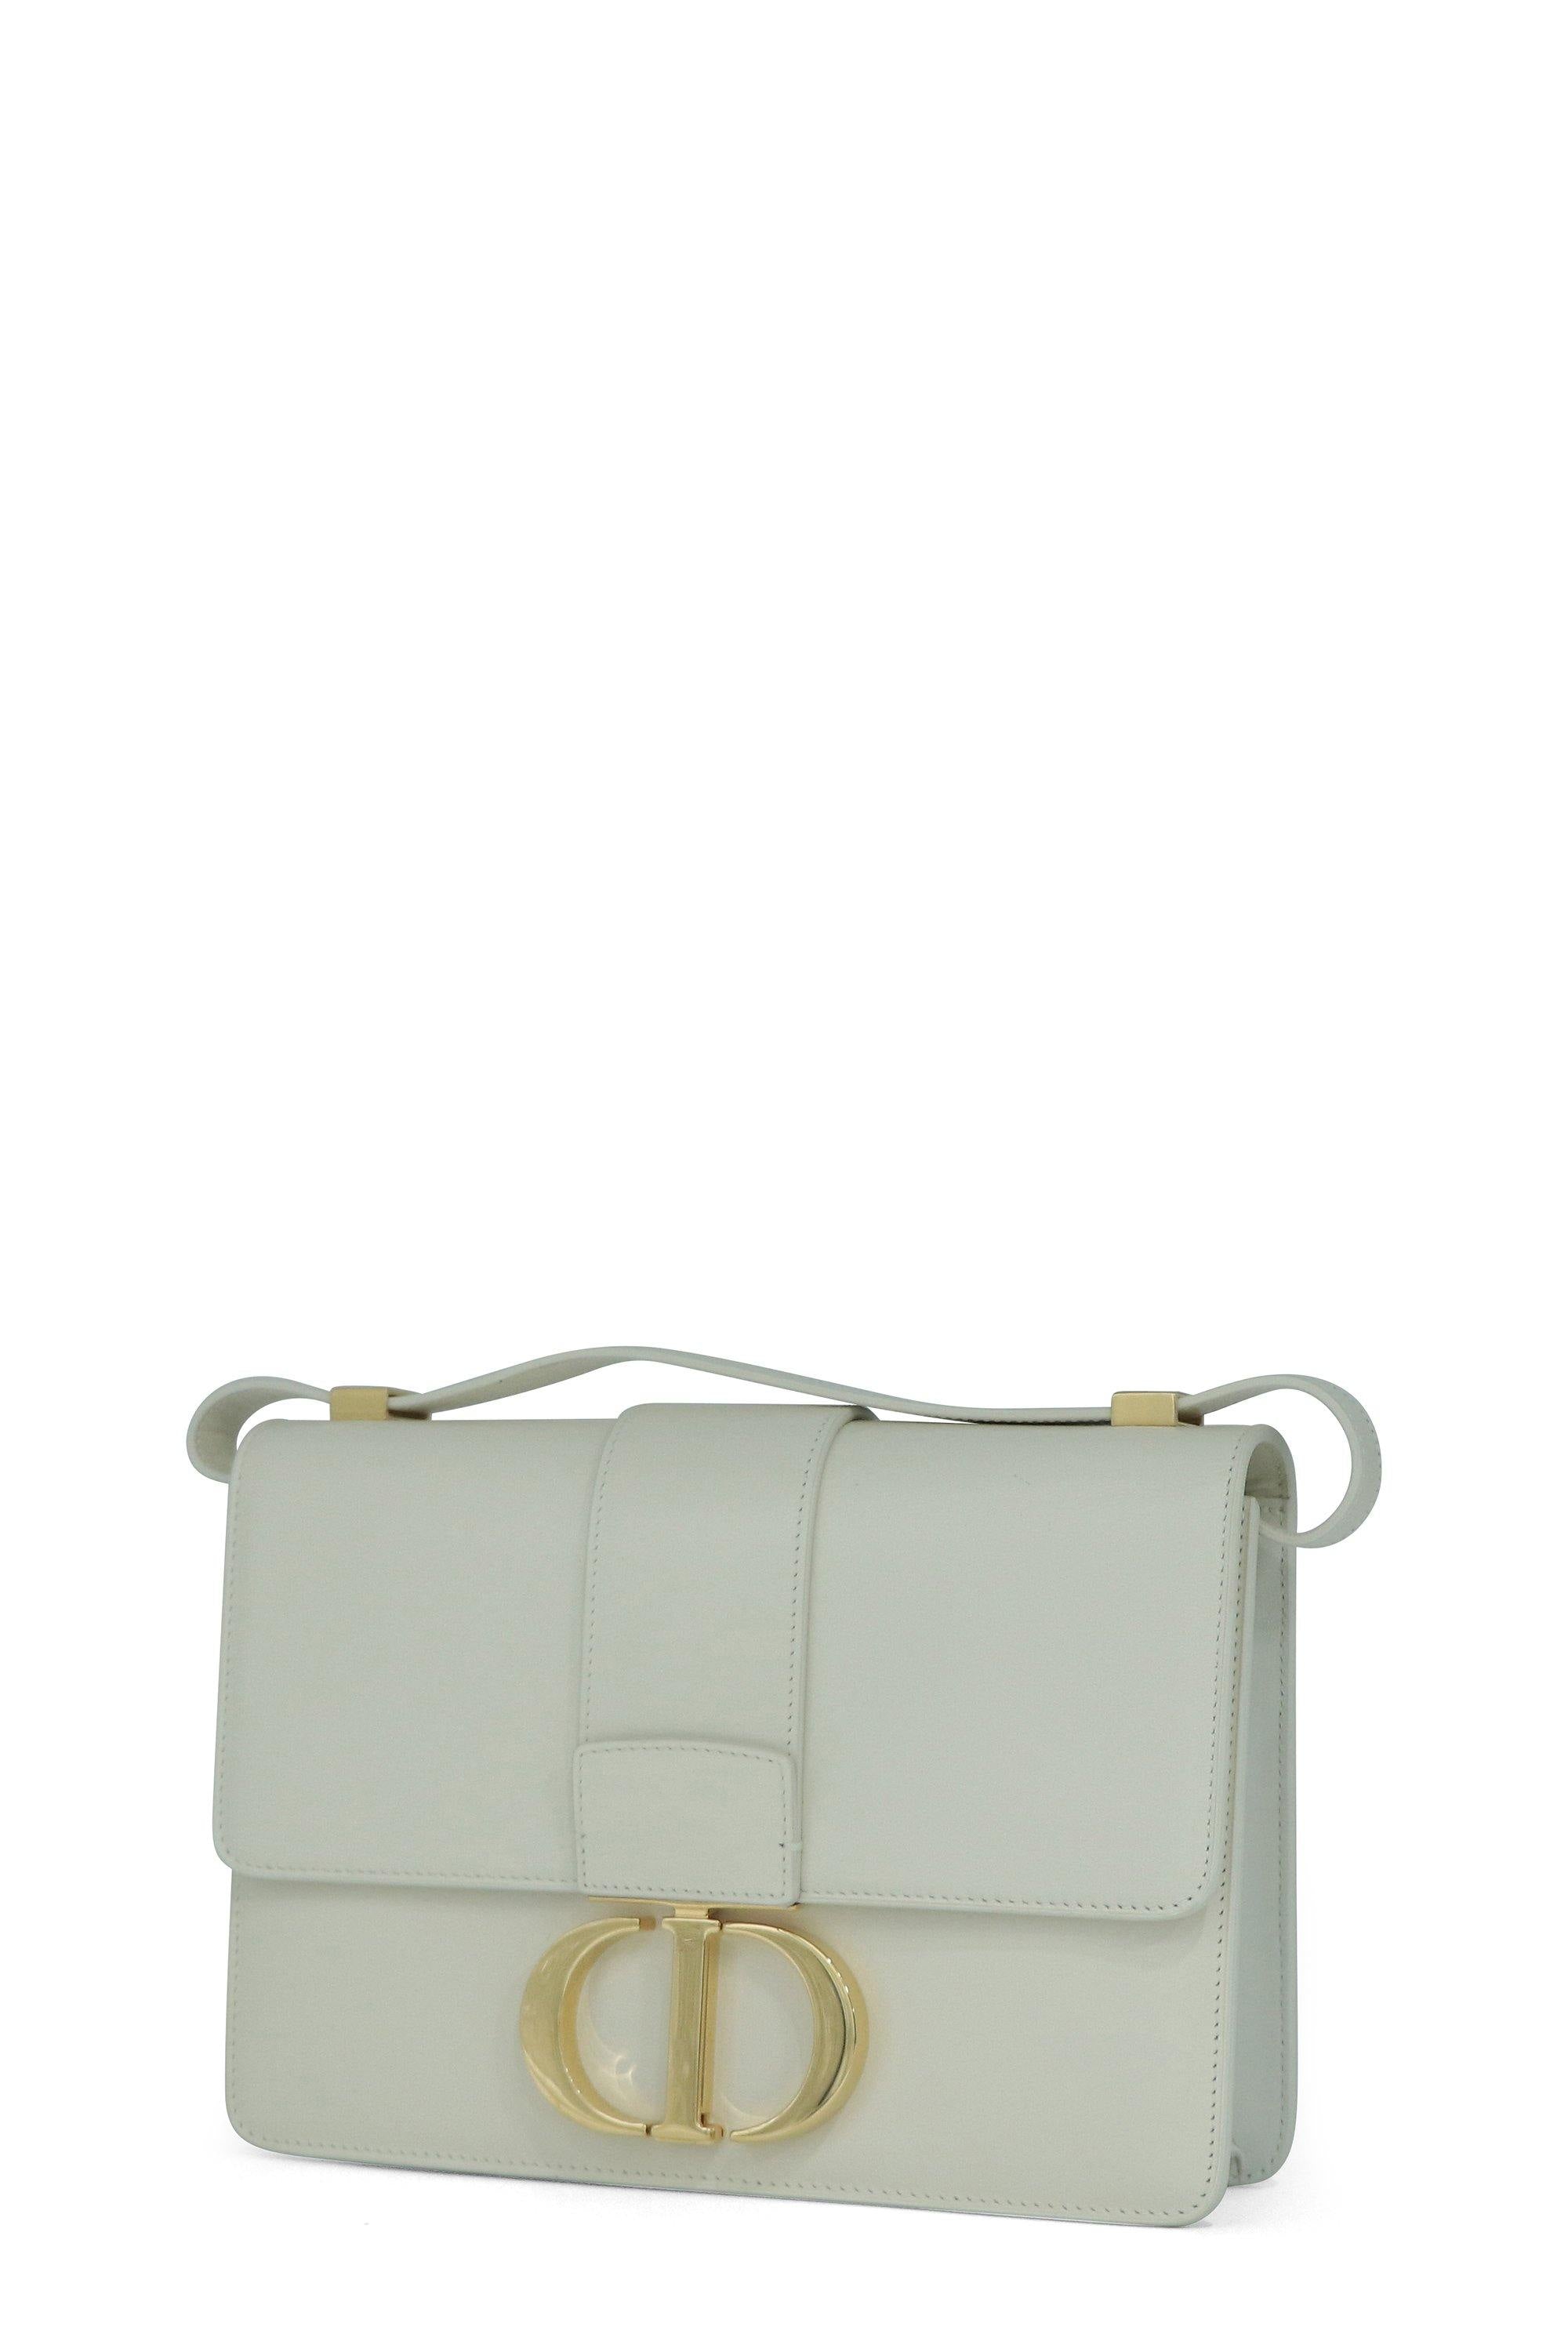 30 Montaigne Bag White  Womens Dior Handbags ⋆ Rincondelamujer